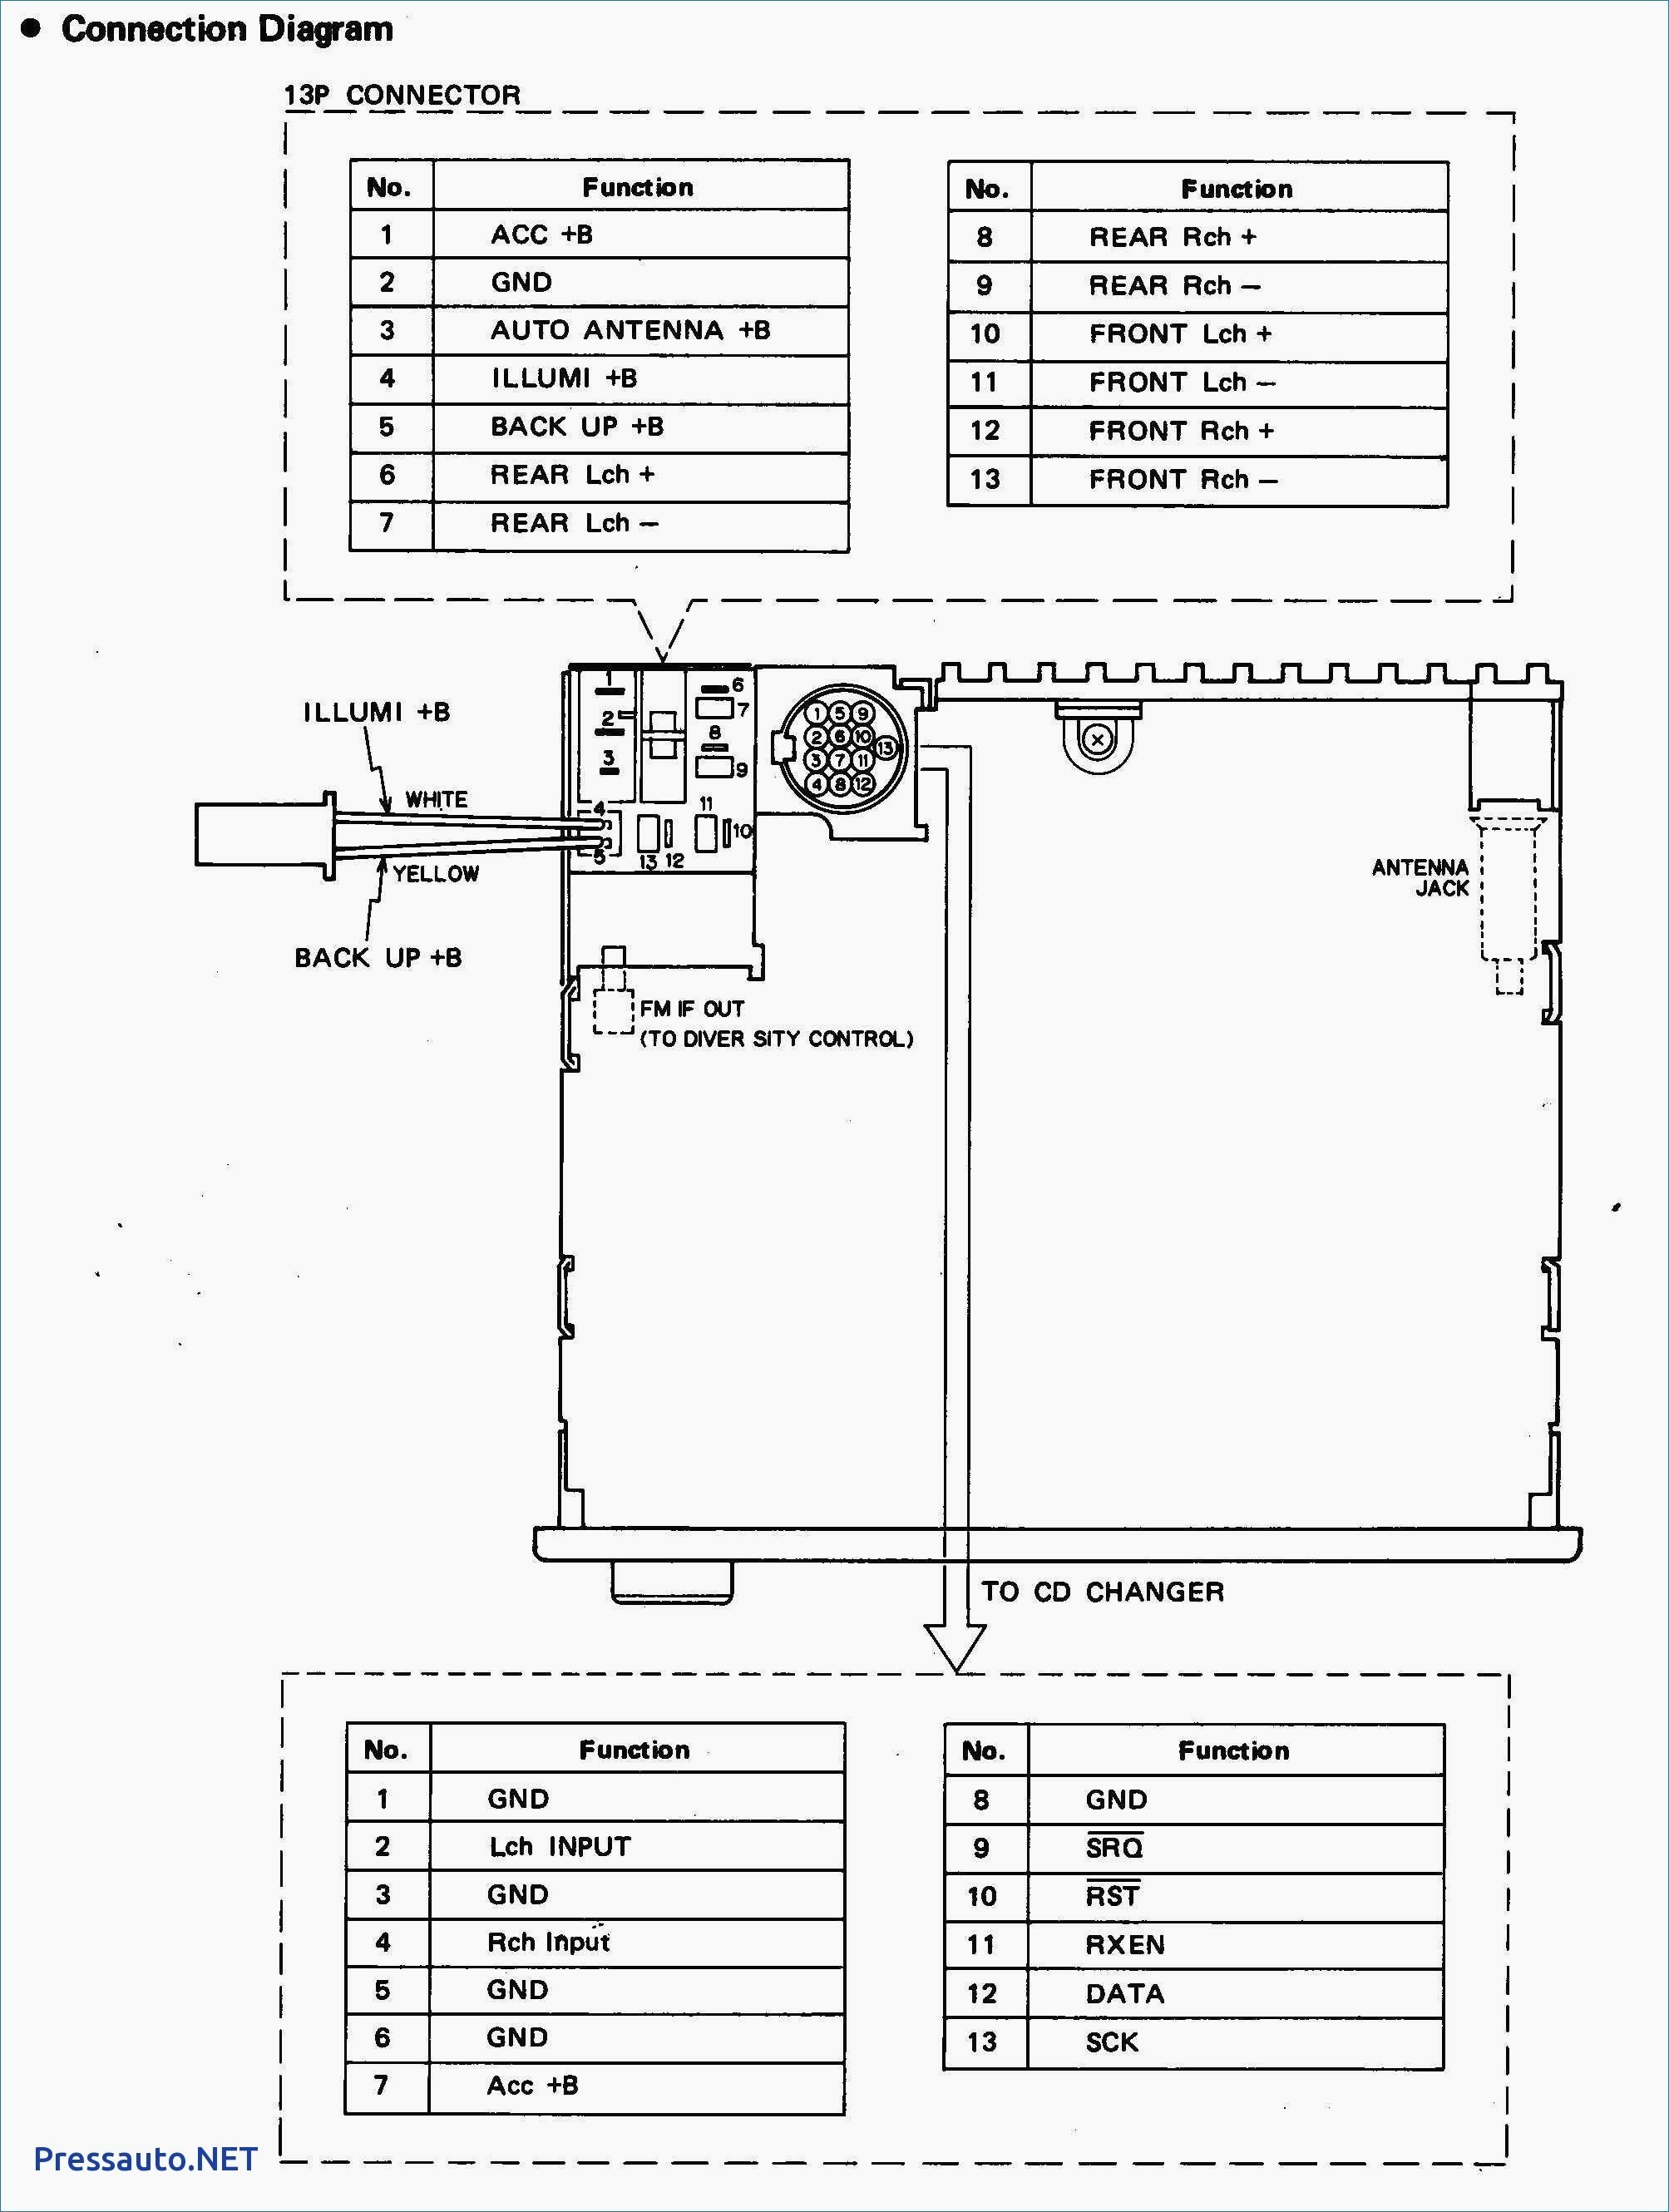 Wiring Diagram Pioneer Deh X1810ub Inspiration Wiring Diagram Pioneer Deh X1810ub Best Famous Pioneer Deh